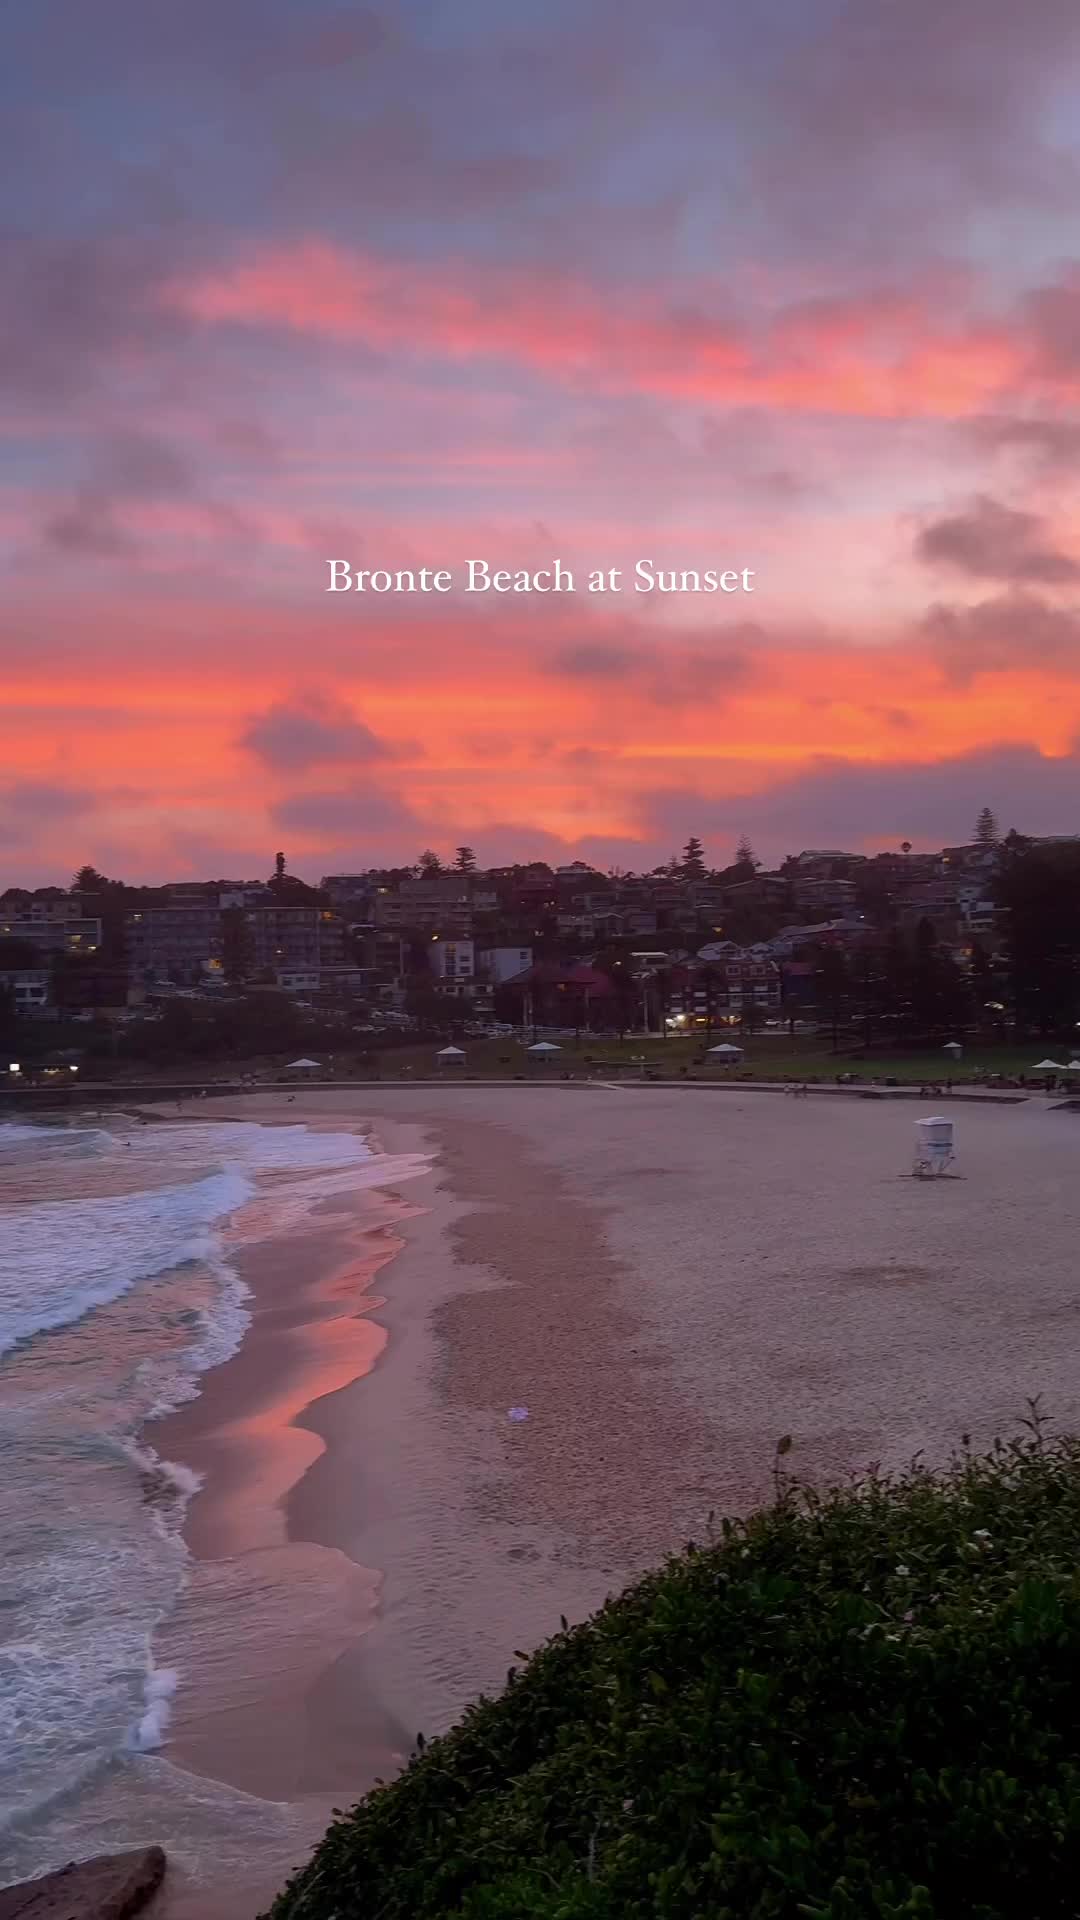 Bronte Beach Sunset: Peaceful Scenes in Sydney